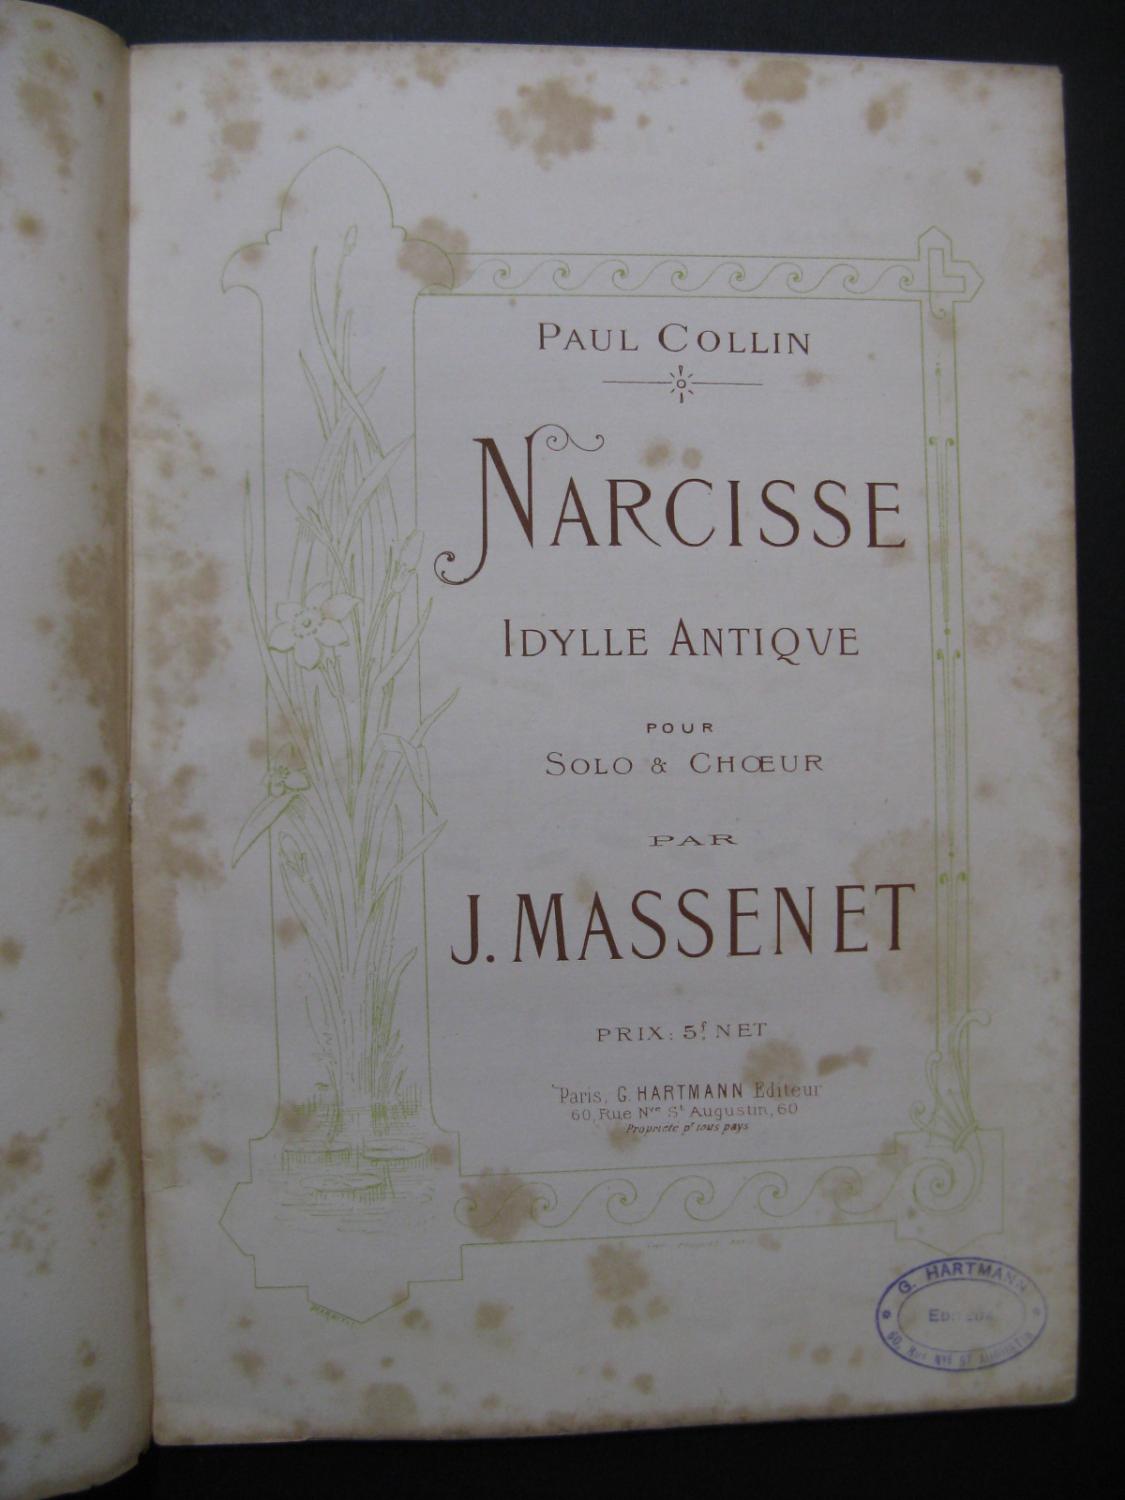 MASSENET Jules Narcisse Chant Piano 1879 by MASSENET Jules Narcisse ...